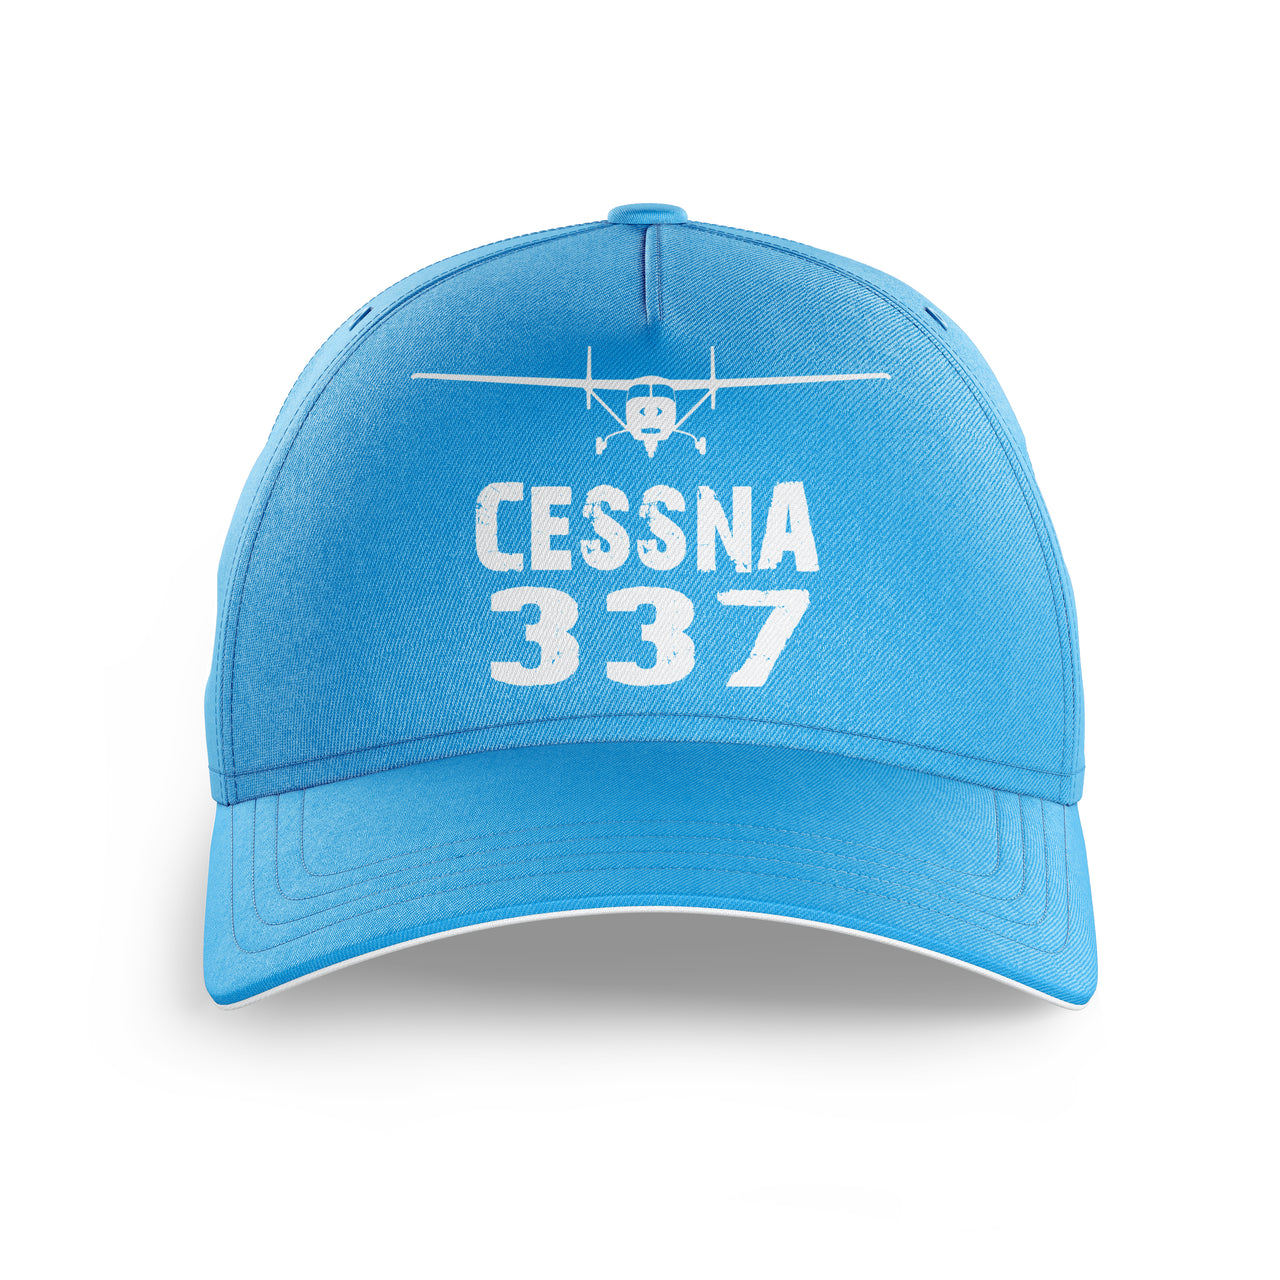 Cessna 337 & Plane Printed Hats